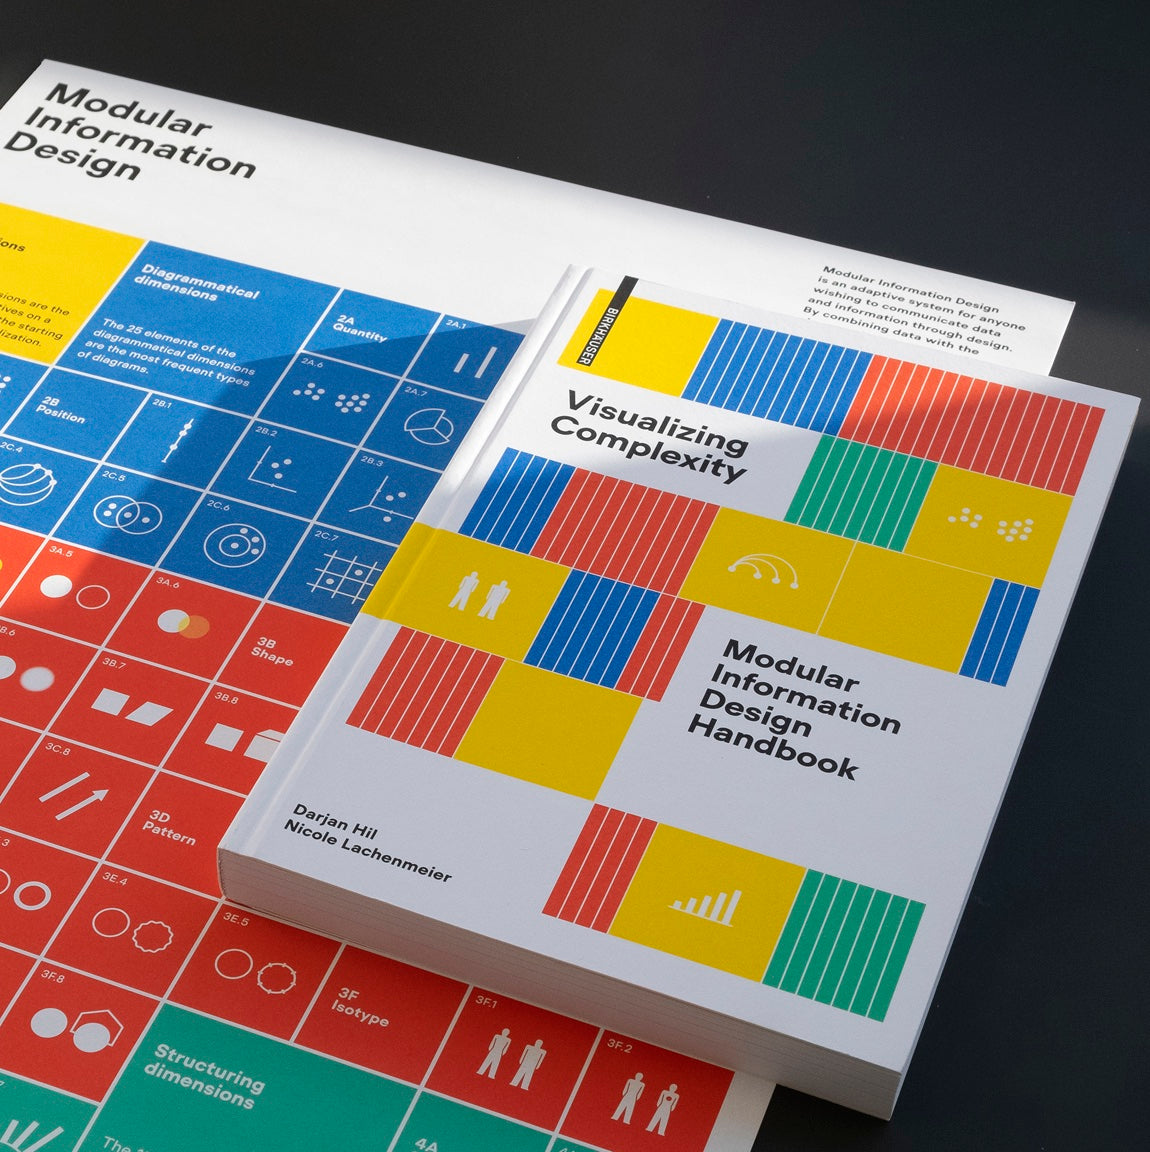 2. Visualizing Complexity – Modular Information Design Handbook + Visual Summary Poster